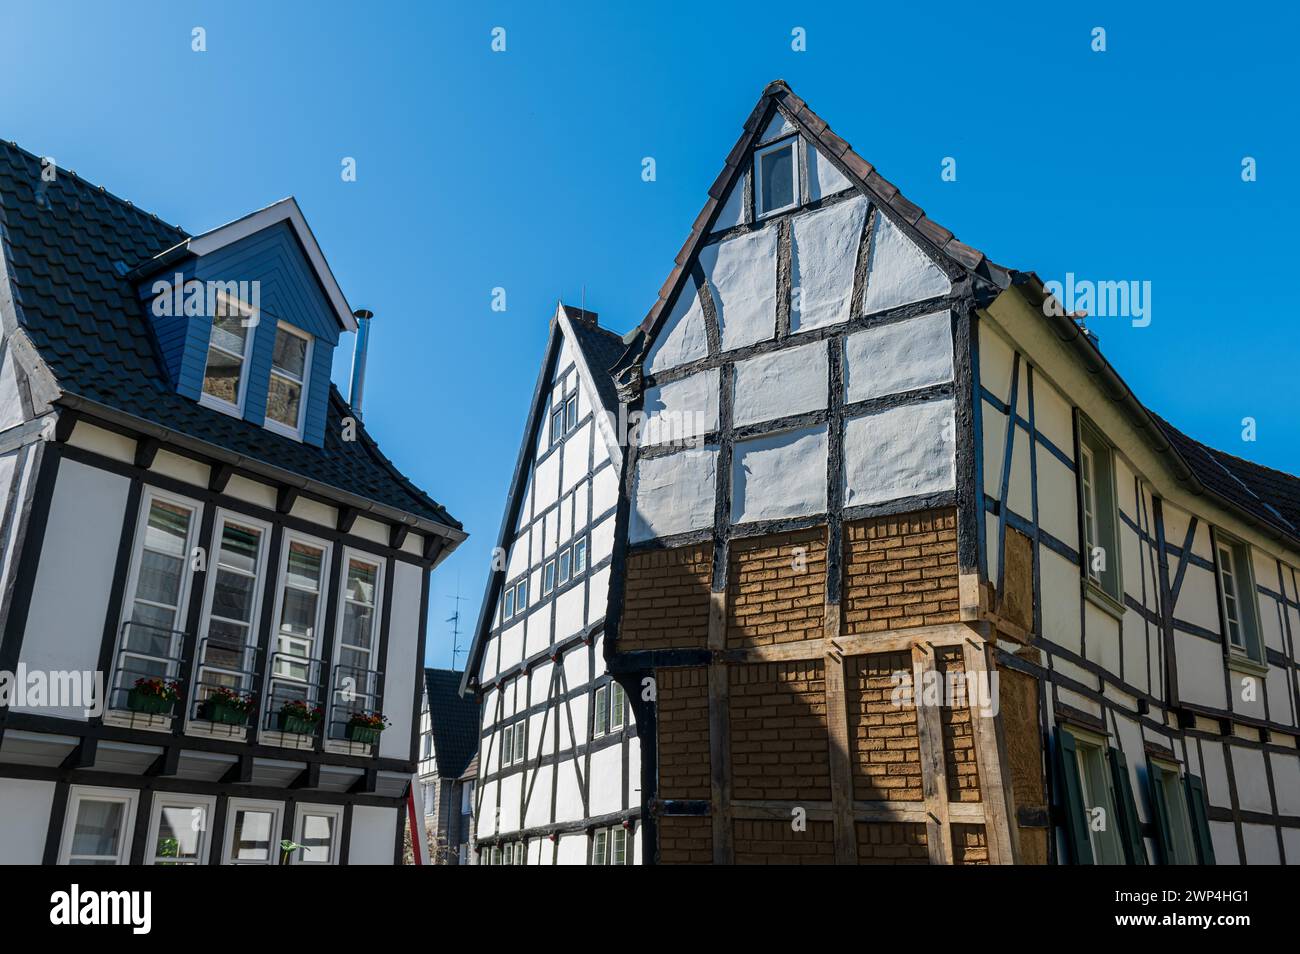 Impresionante casa histórica de entramado de madera con estructuras distintivas contra un cielo azul, casco antiguo, Hattingen, distrito de Ennepe-Ruhr, zona de Ruhr, Norte Foto de stock